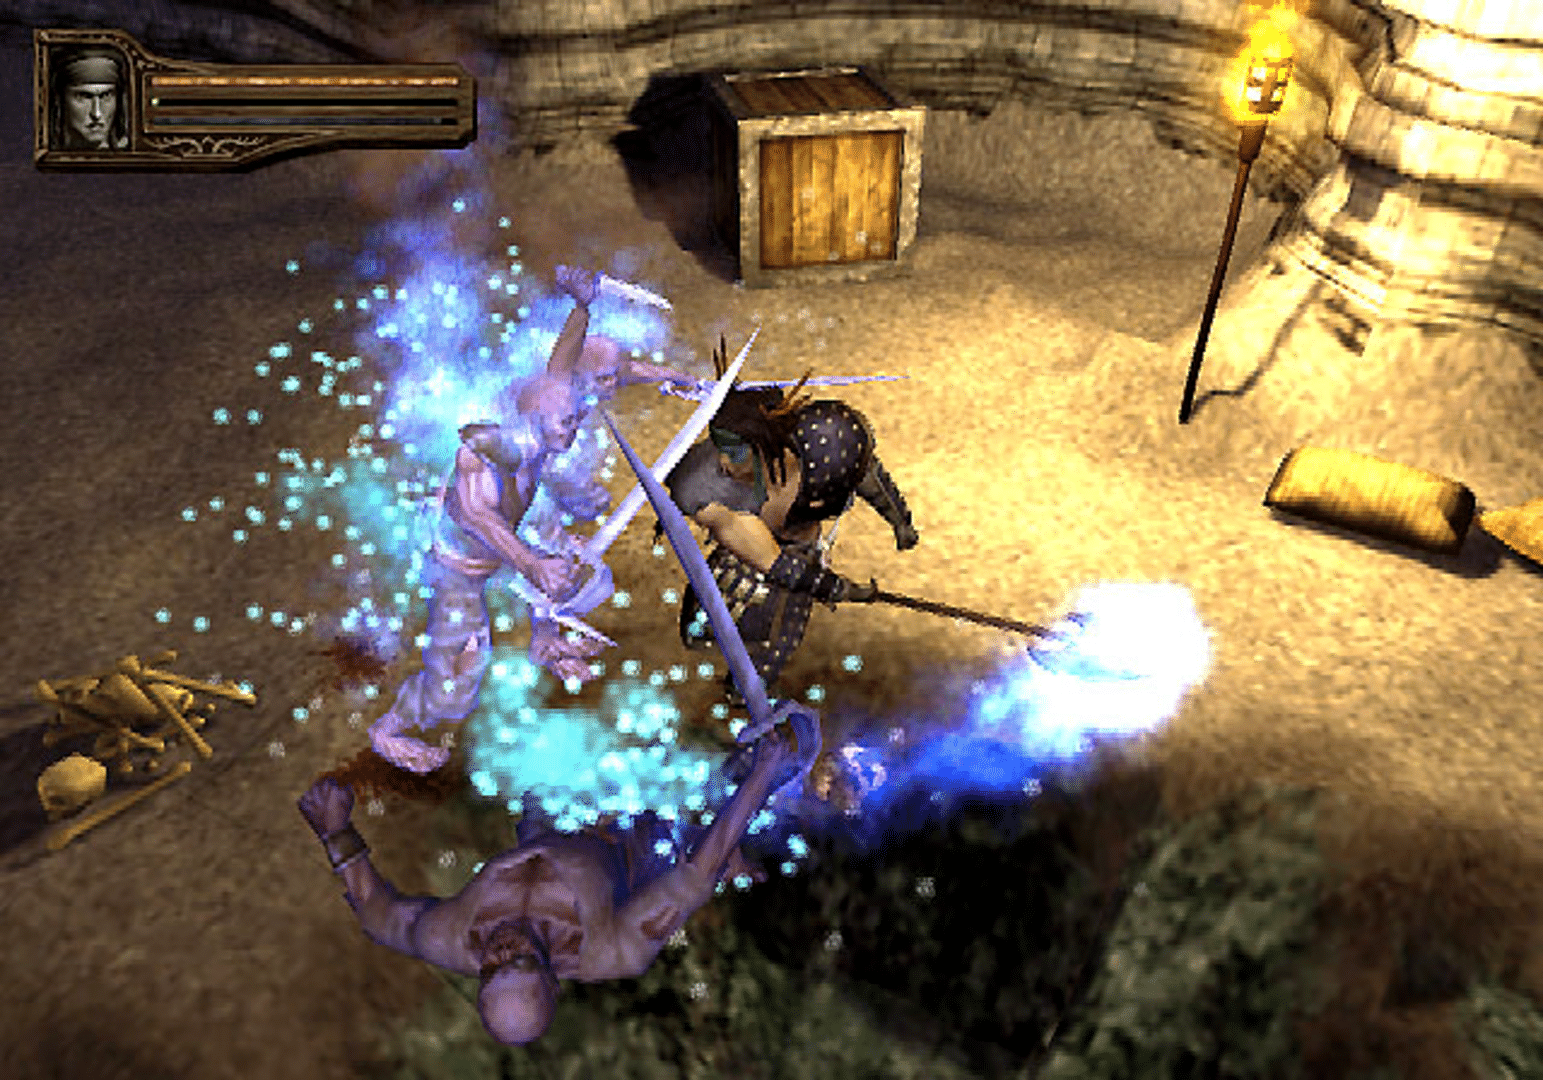 Baldur's Gate: Dark Alliance II screenshot